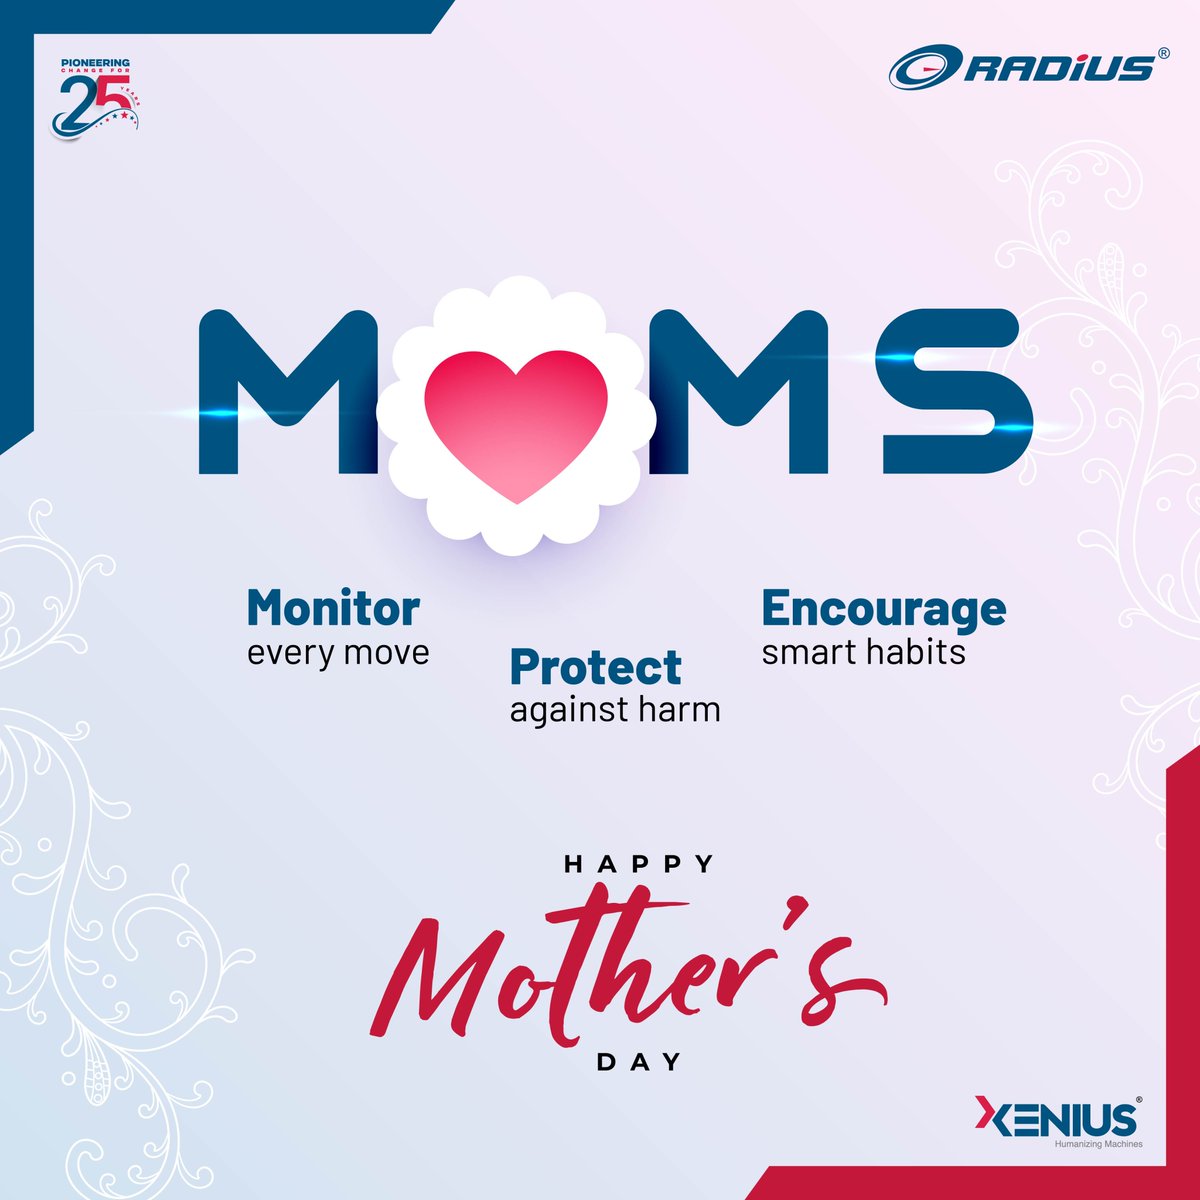 Happy mother's day!

#MomLove #SuperMomVibes #MotherhoodMagic #MomLifeJoy #MomsRock #CelebratingMom #MomAppreciation #ThanksMom #happymotherday